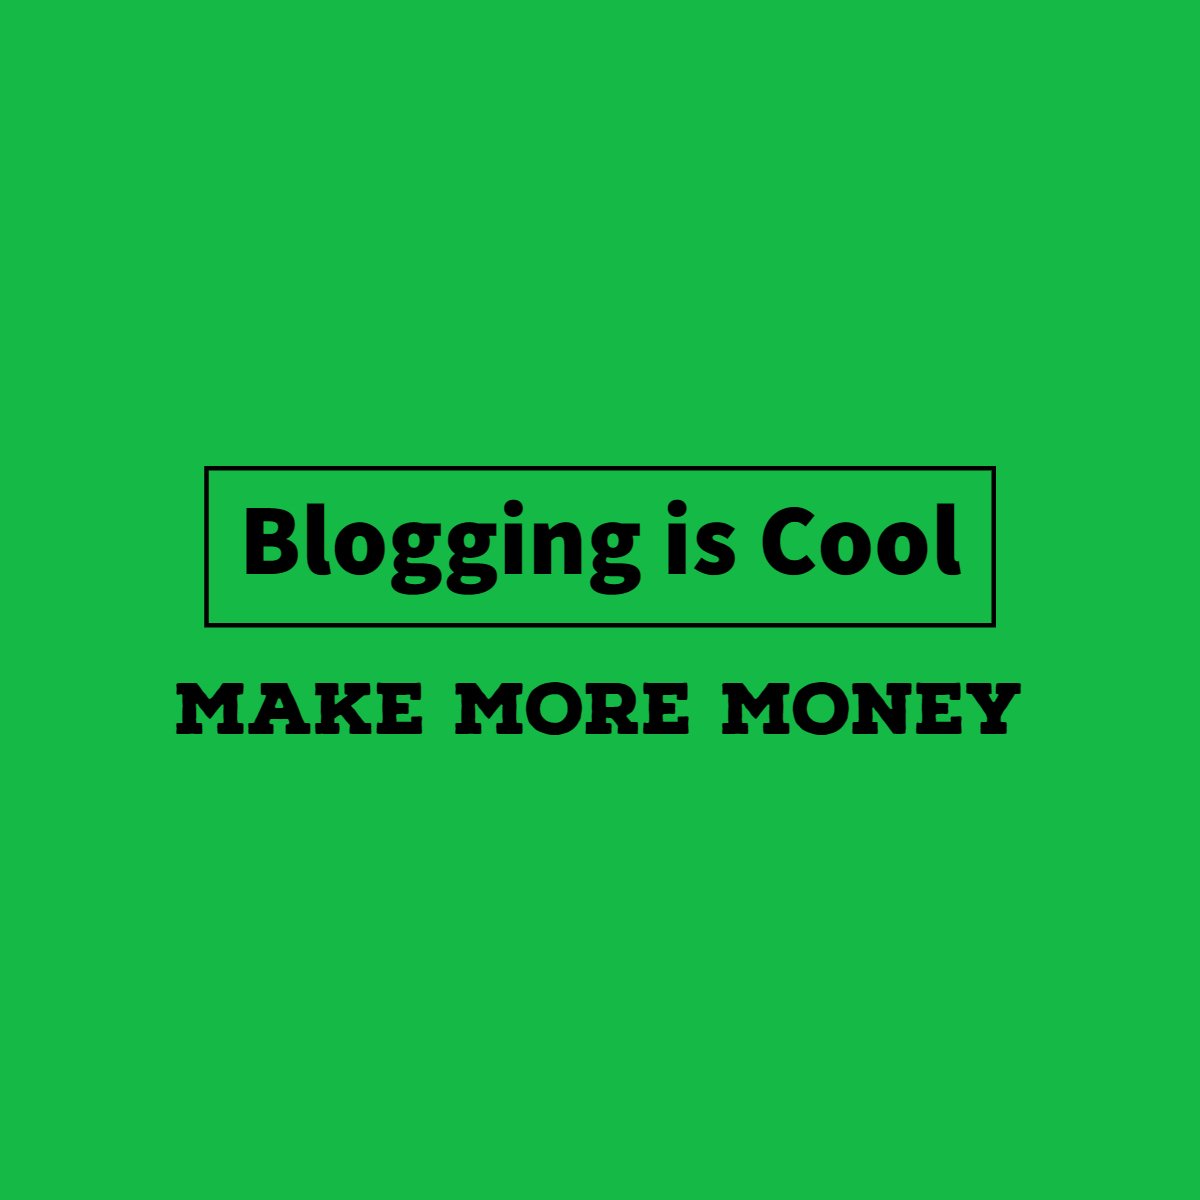 bloggingiscool.com make money using AdSterra network